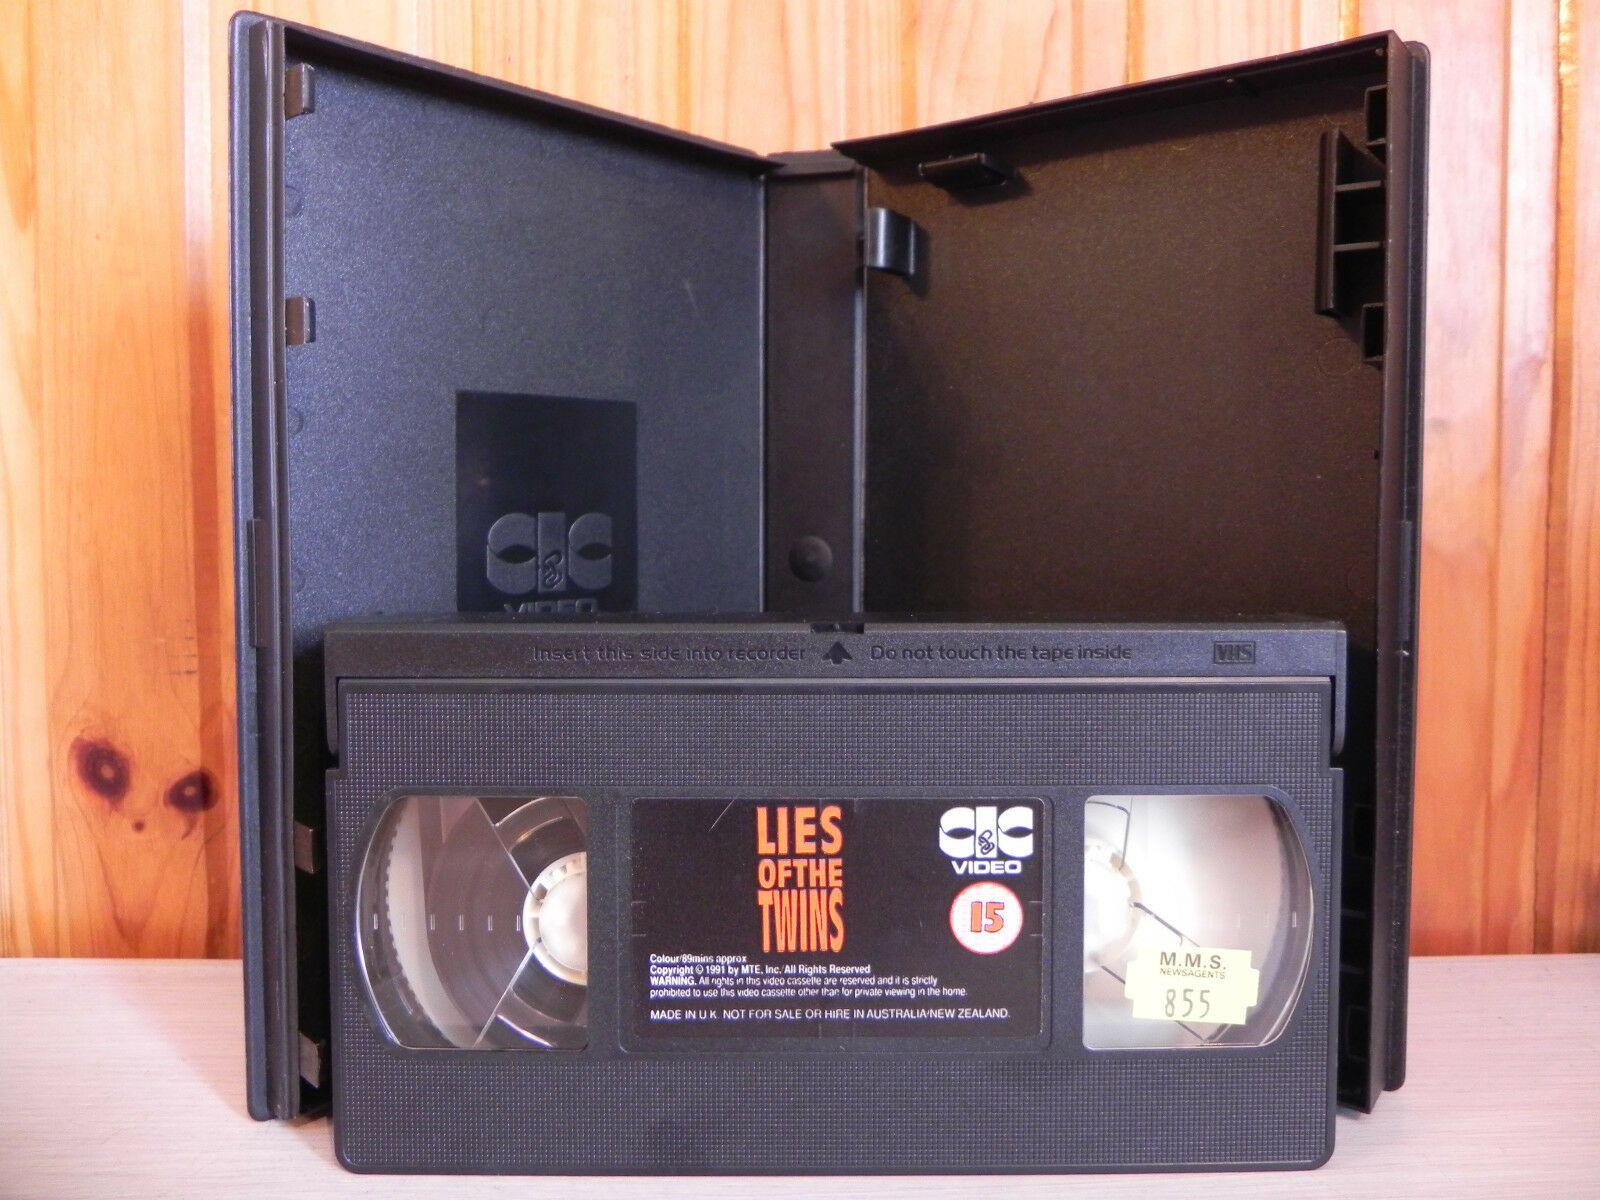 Lies Of The Twins - Aidan Quinn - Big Box - Dangerous Thriller - Ex-Rental - VHS-